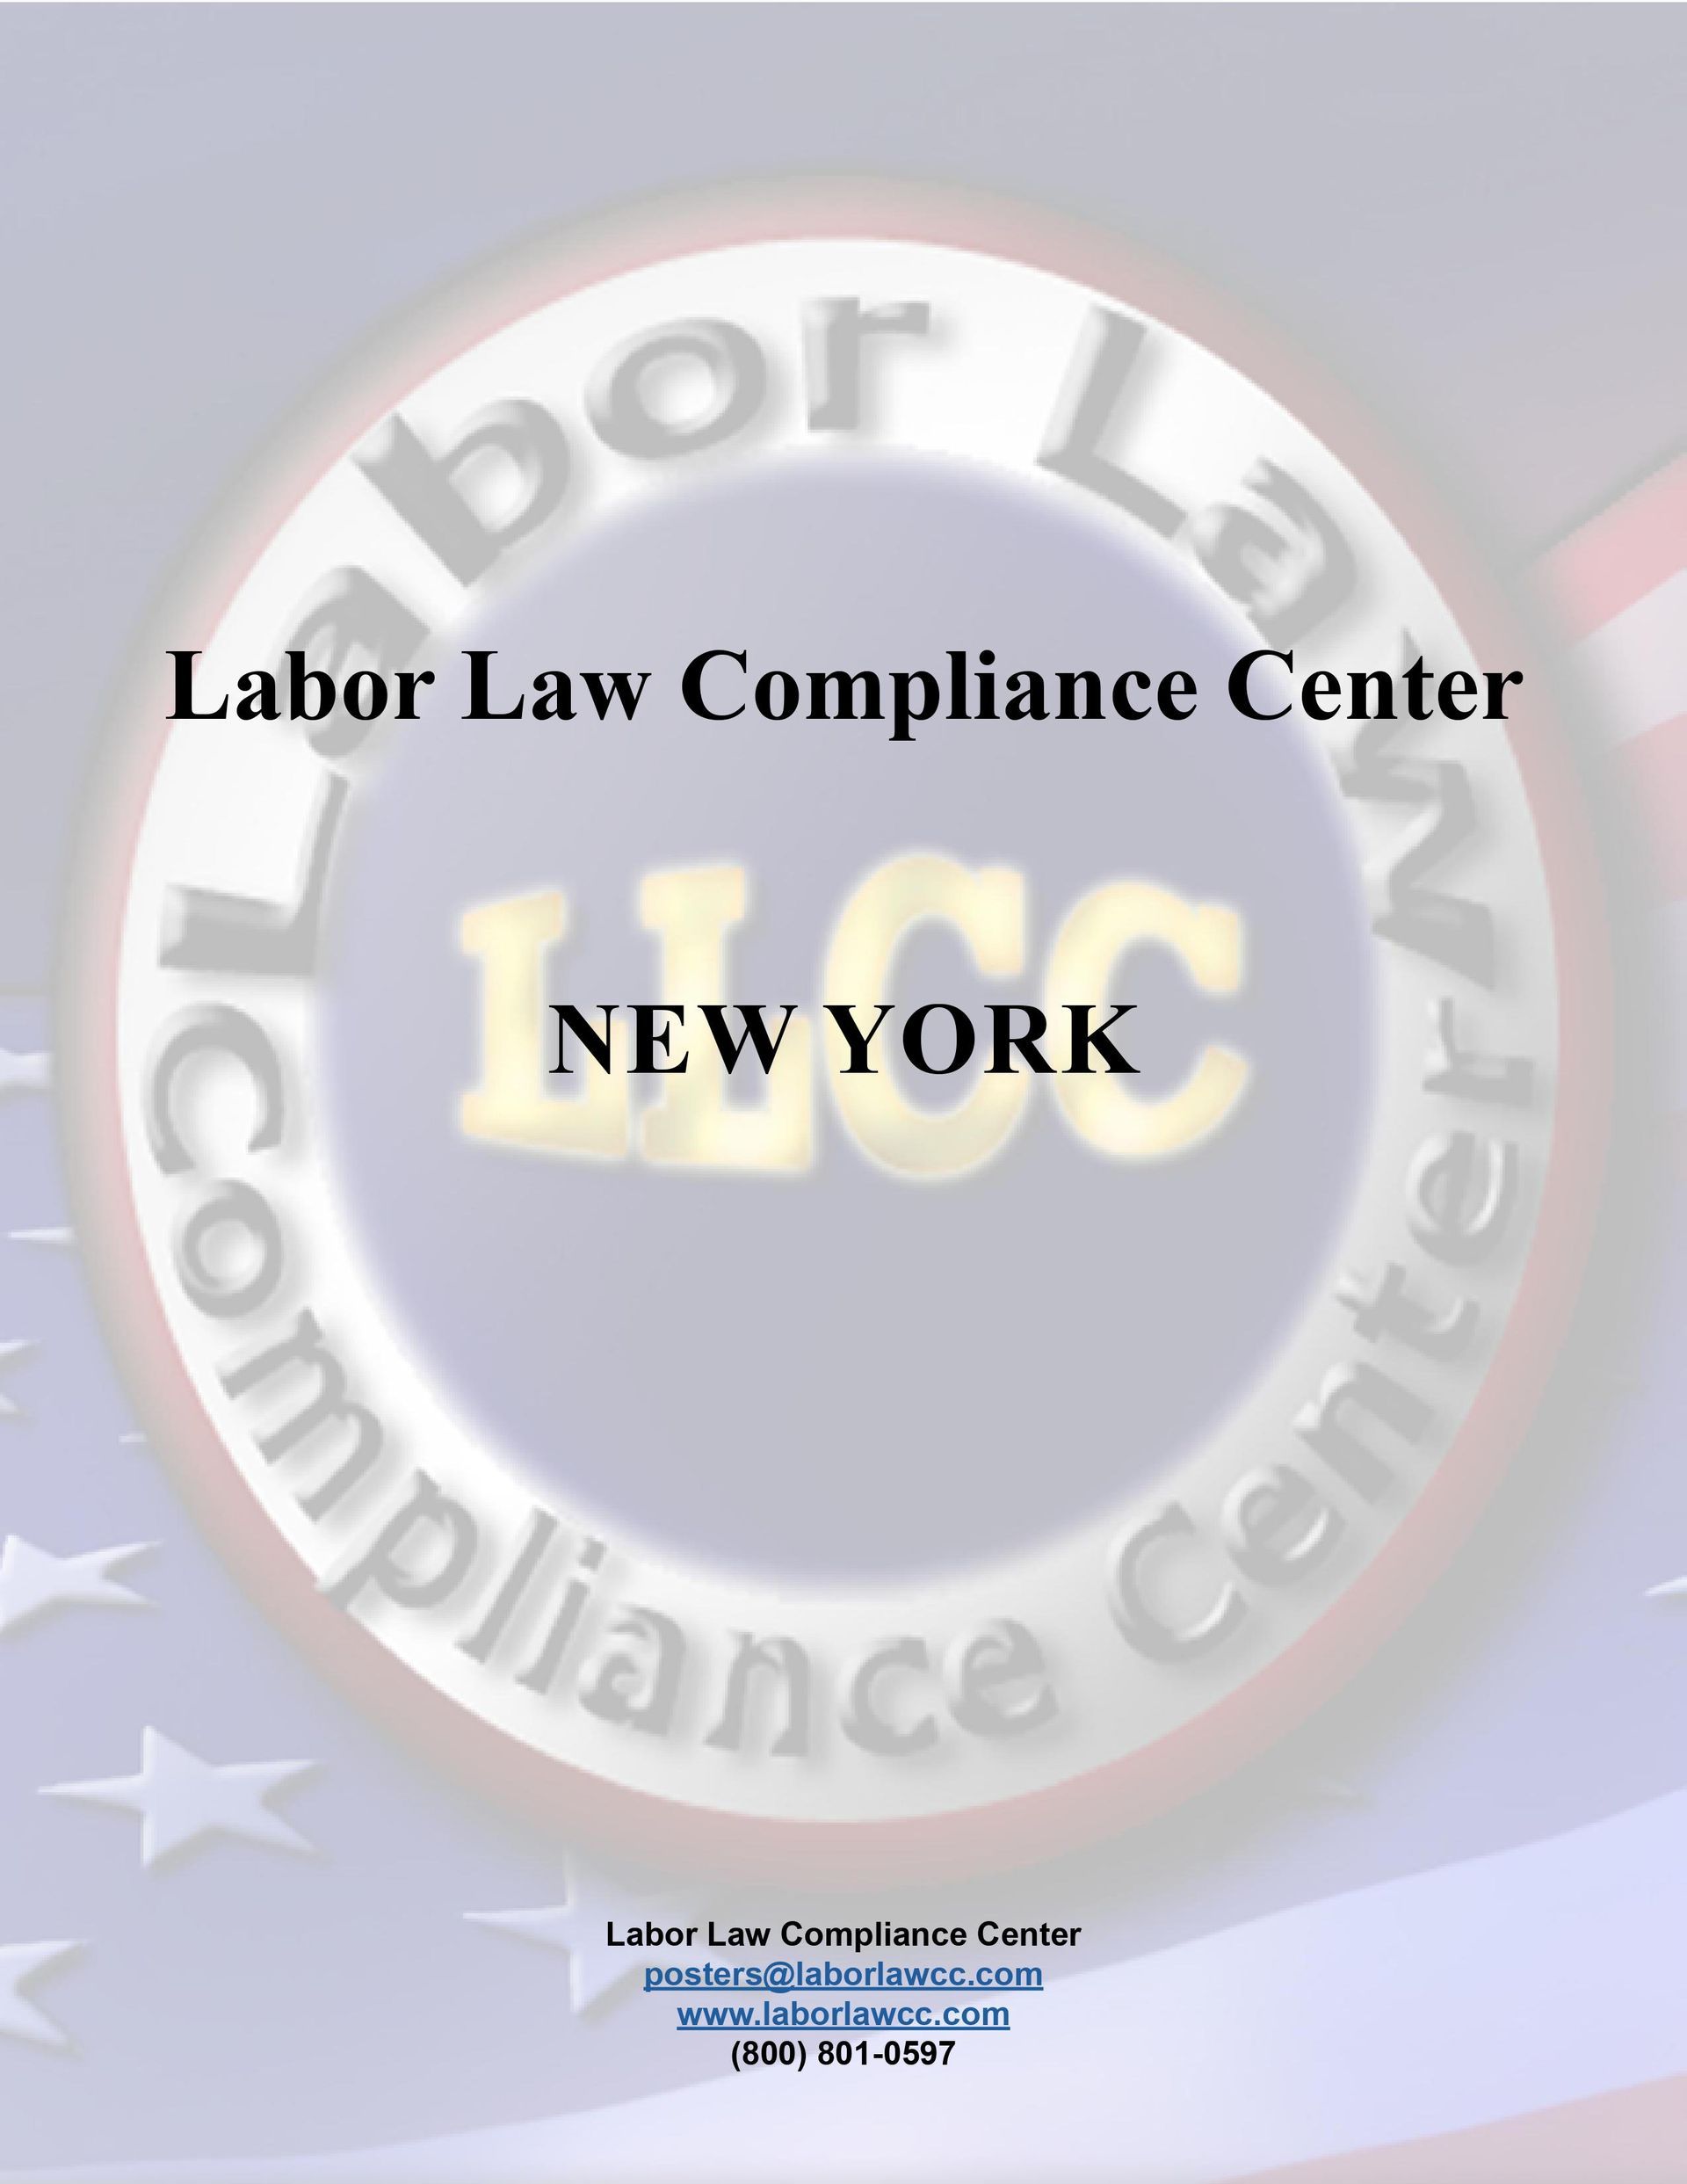 Labor Law Compliance Center - New York City